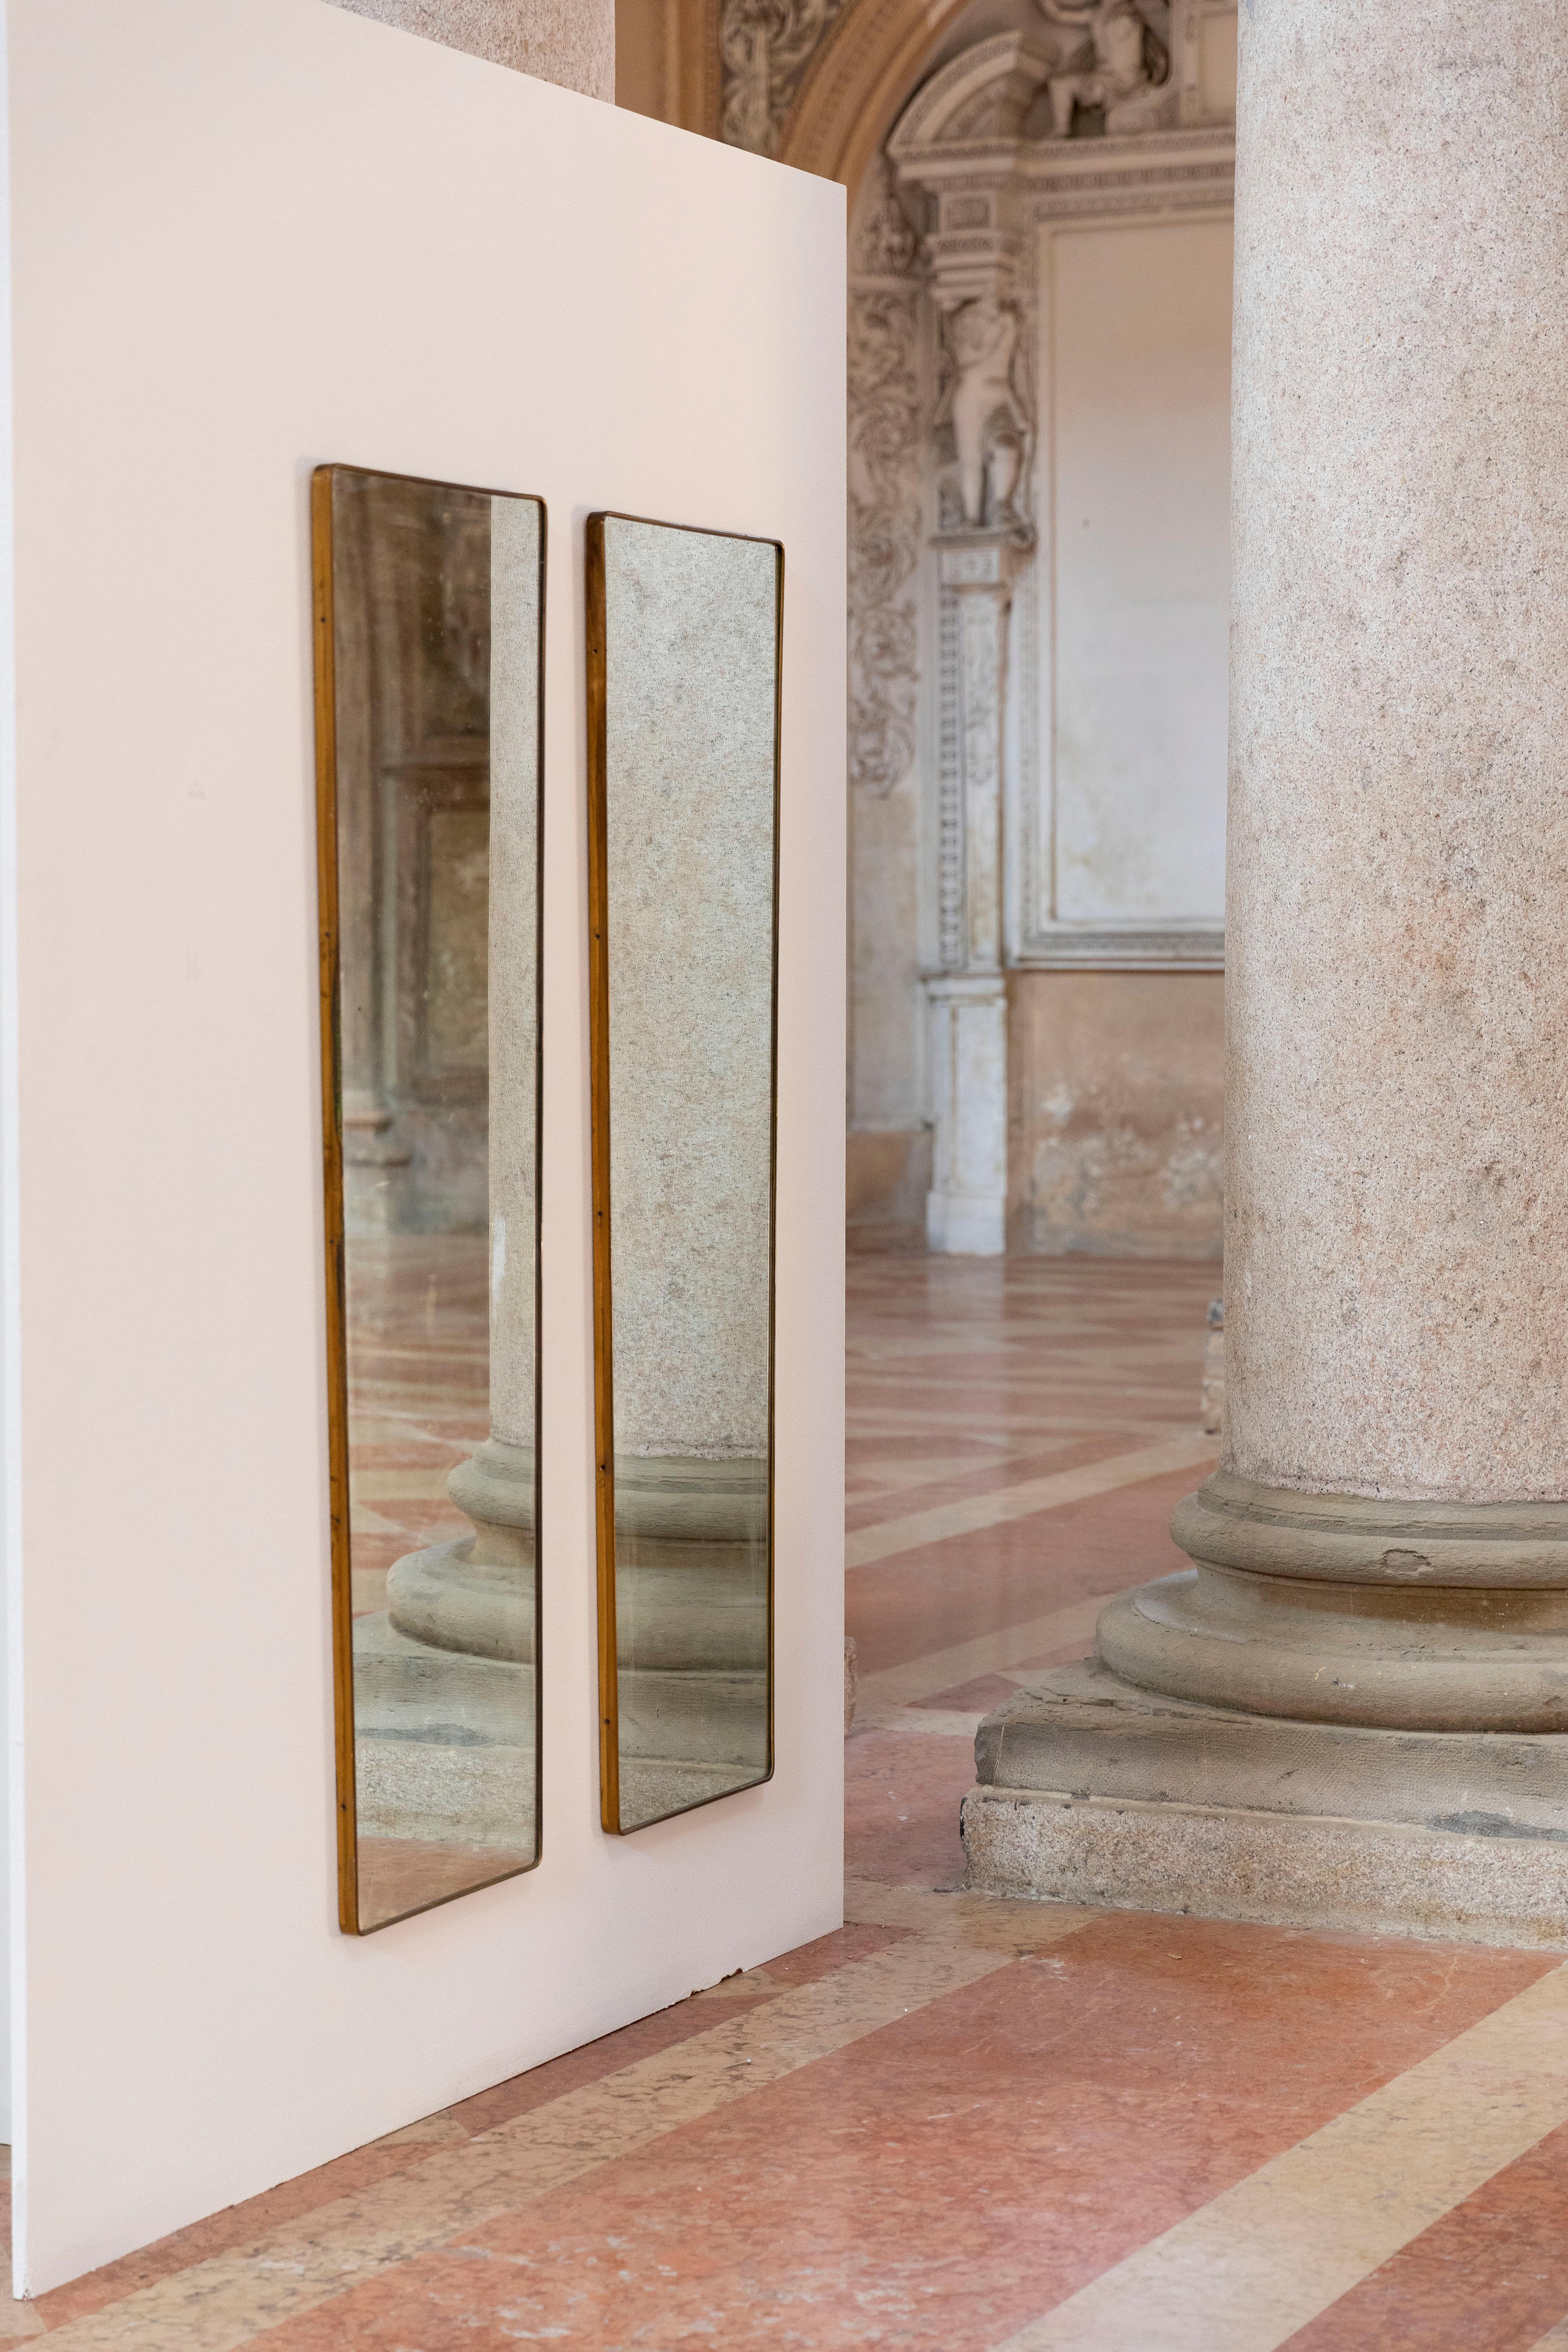 Rare pair of Italian midcentury brass mirrors.
Very elegant in an unusual measures.